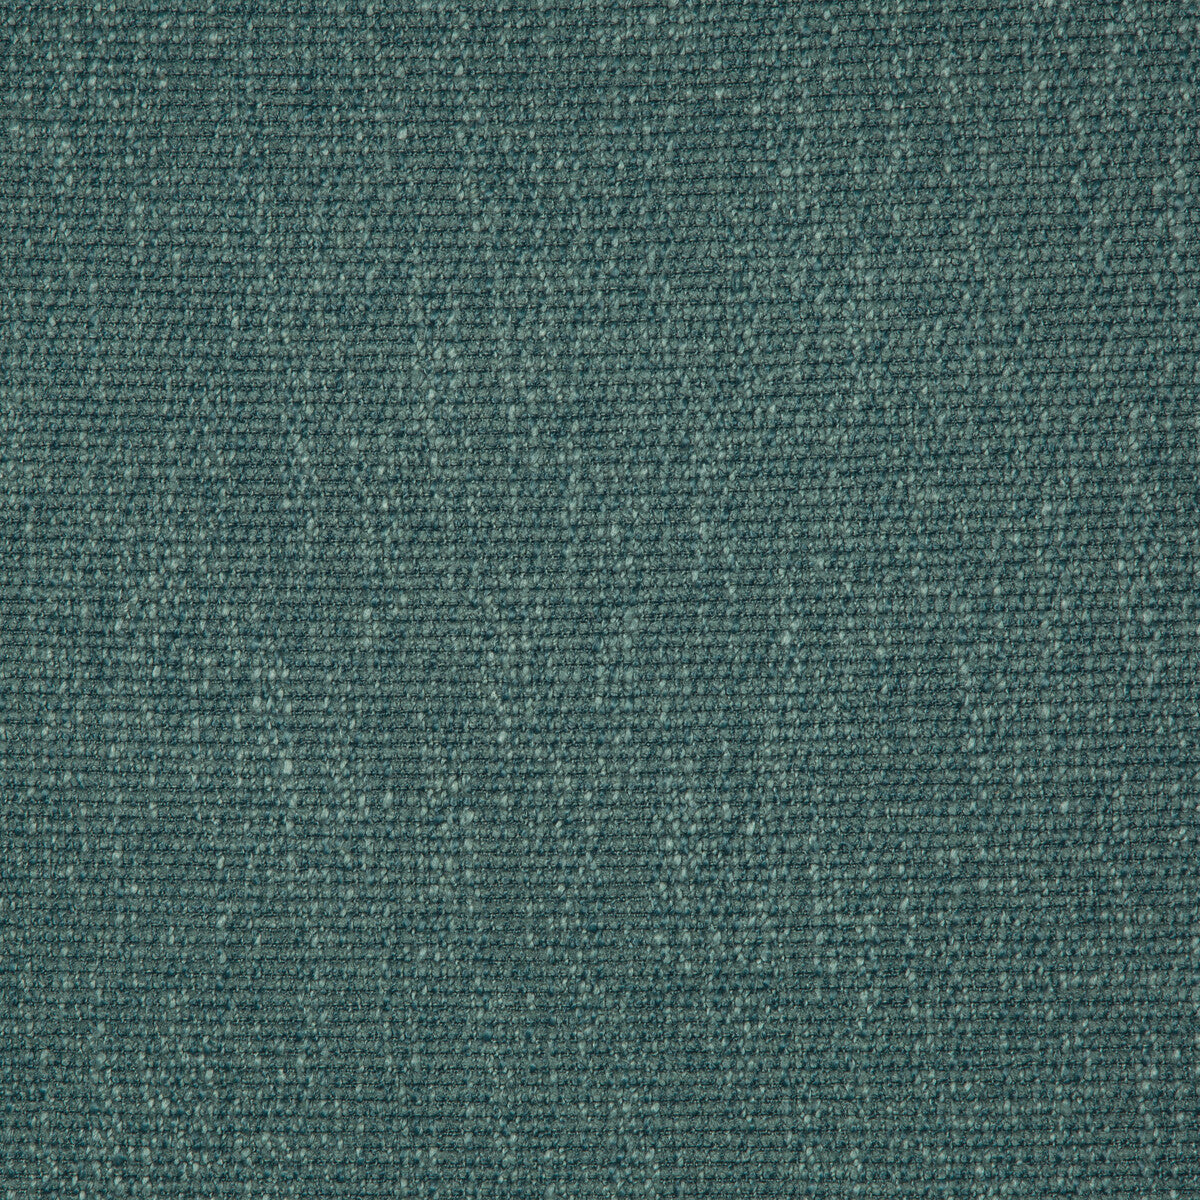 Kravet Smart fabric in 35943-505 color - pattern 35943.505.0 - by Kravet Smart in the Performance Kravetarmor collection